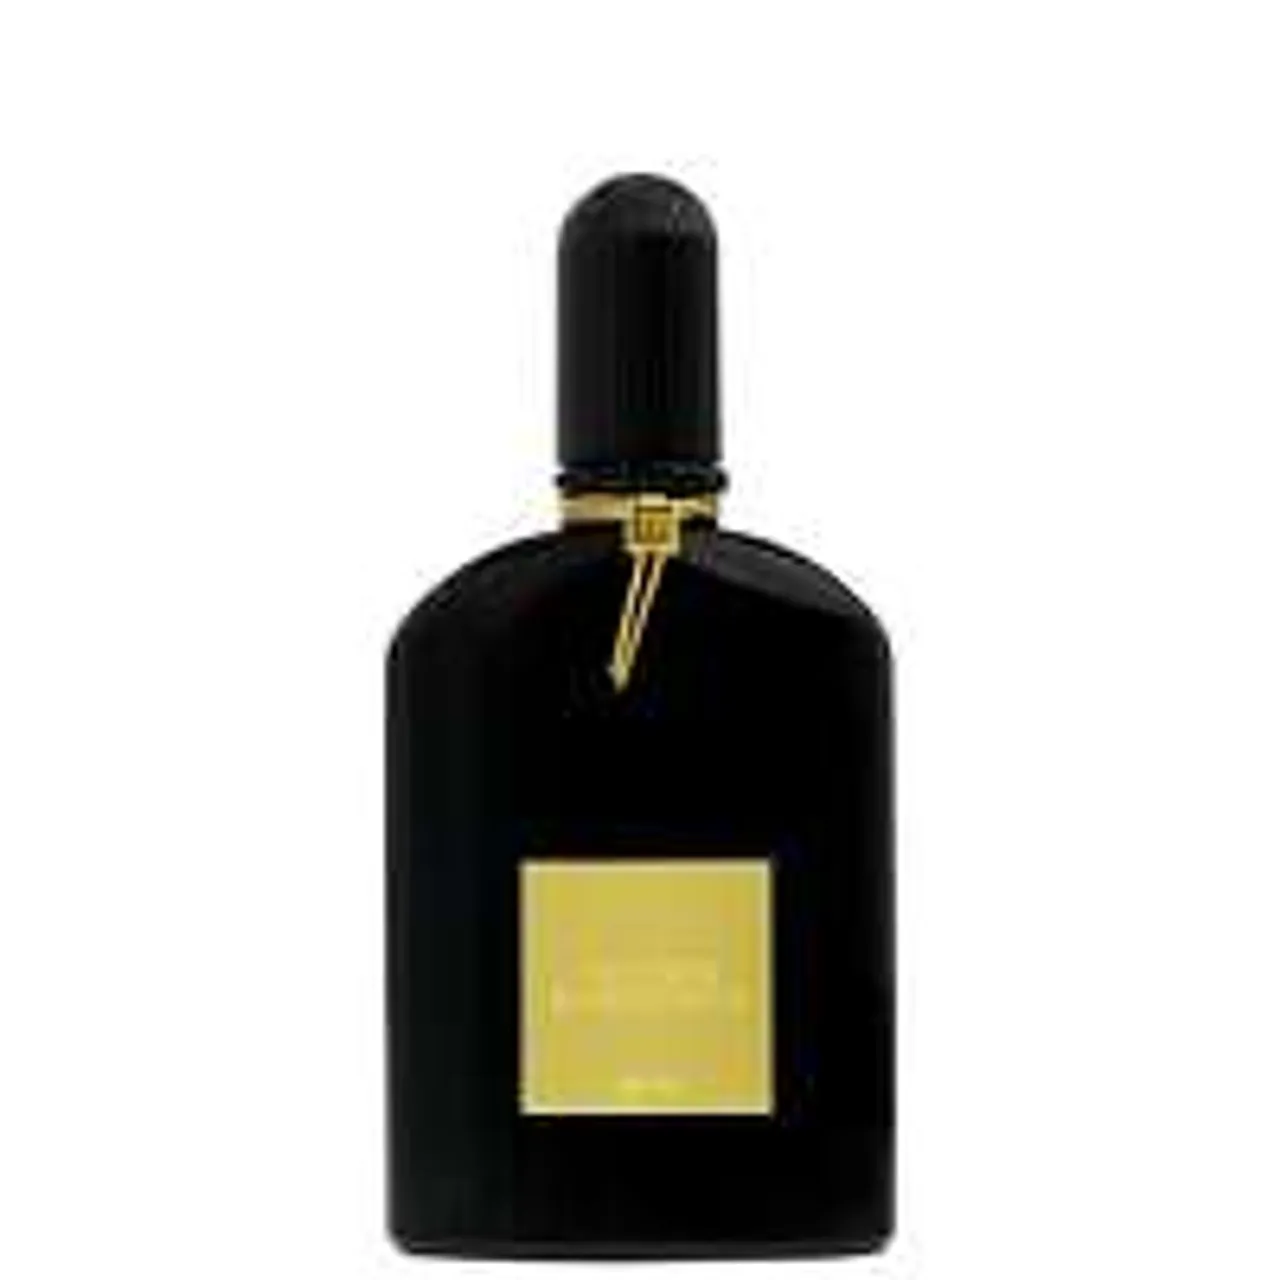 Tom Ford Black Orchid Eau de Parfum Spray 50ml